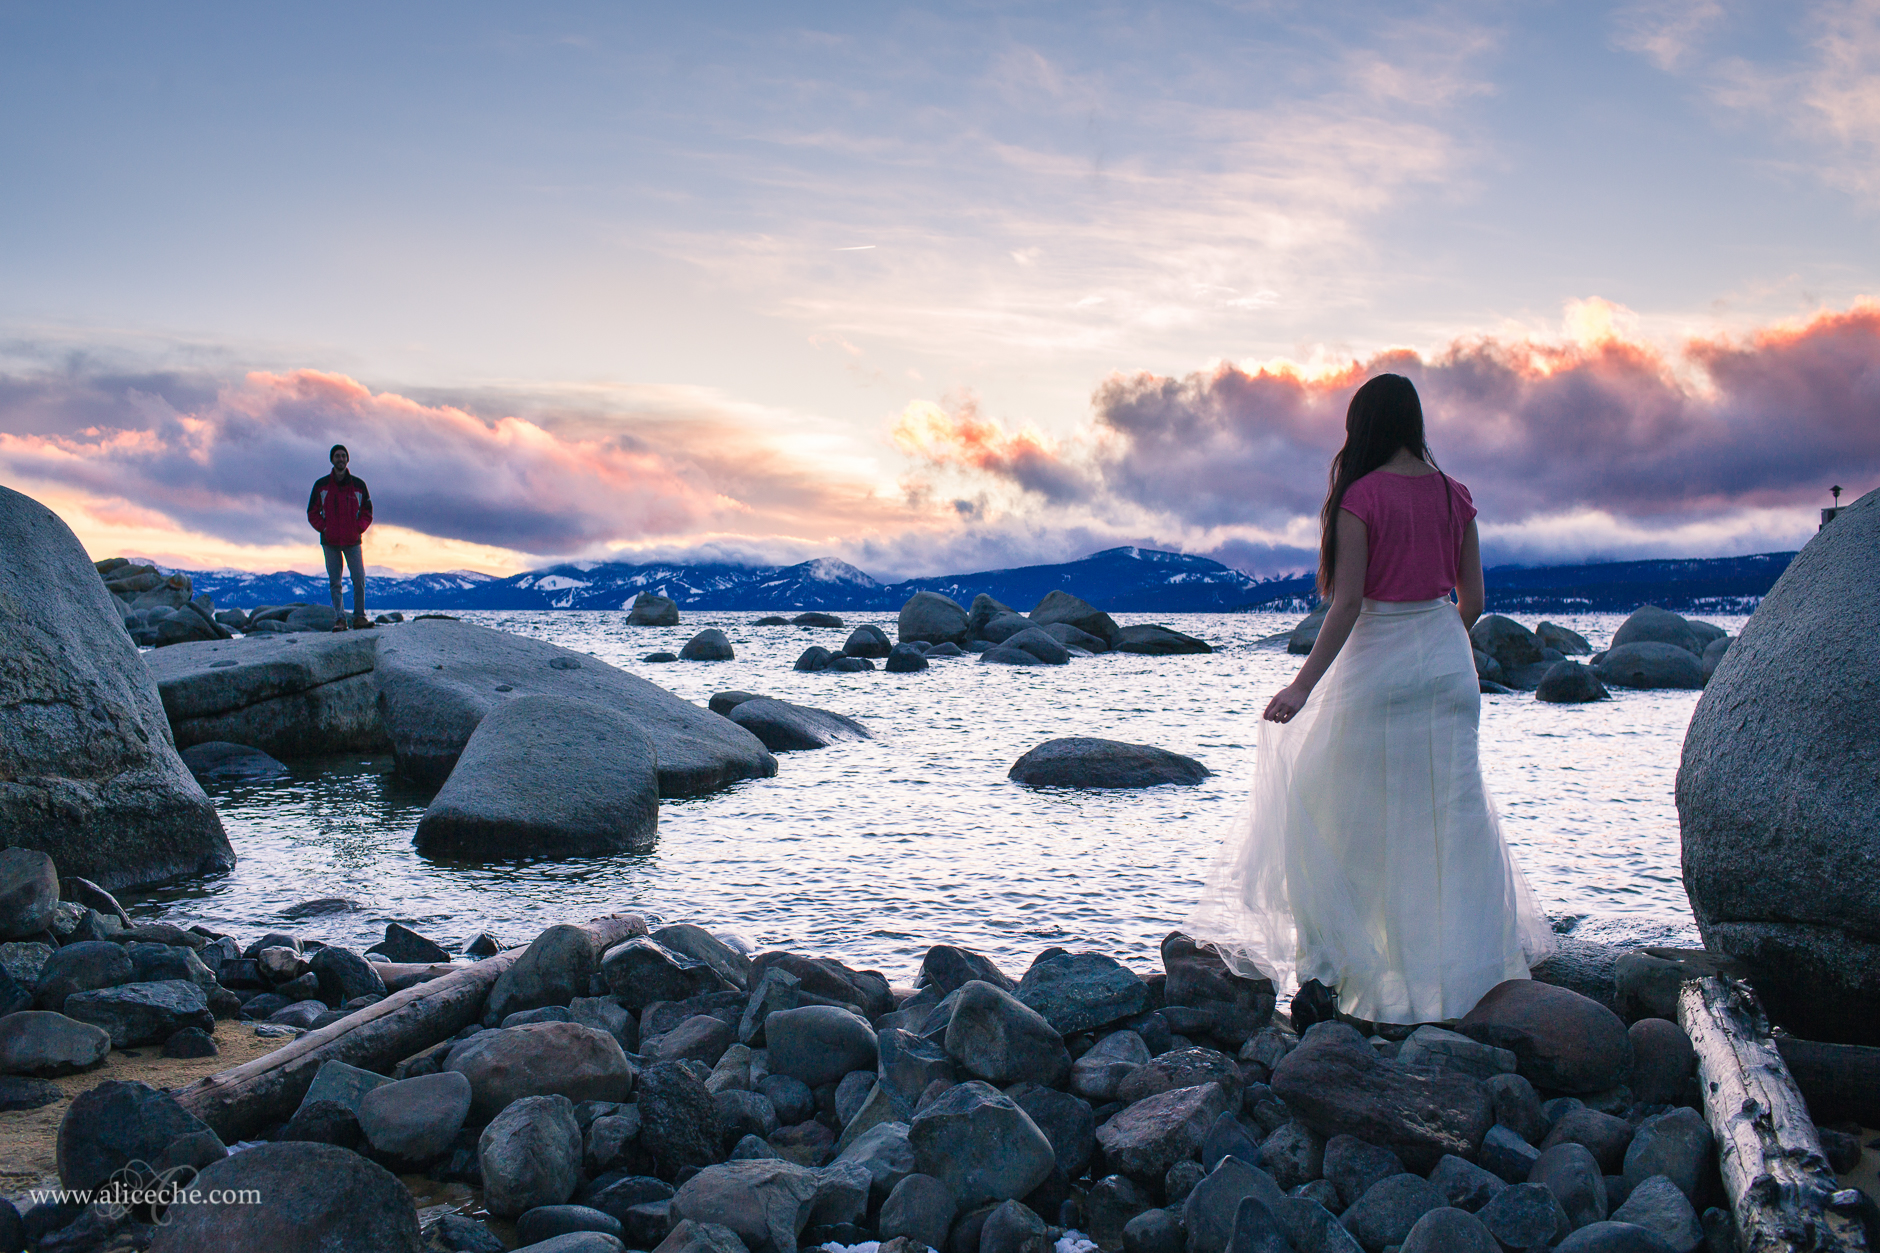 alice-che-photography-lake-tahoe-self-portrait-sunset-boy-girl-on-rocks